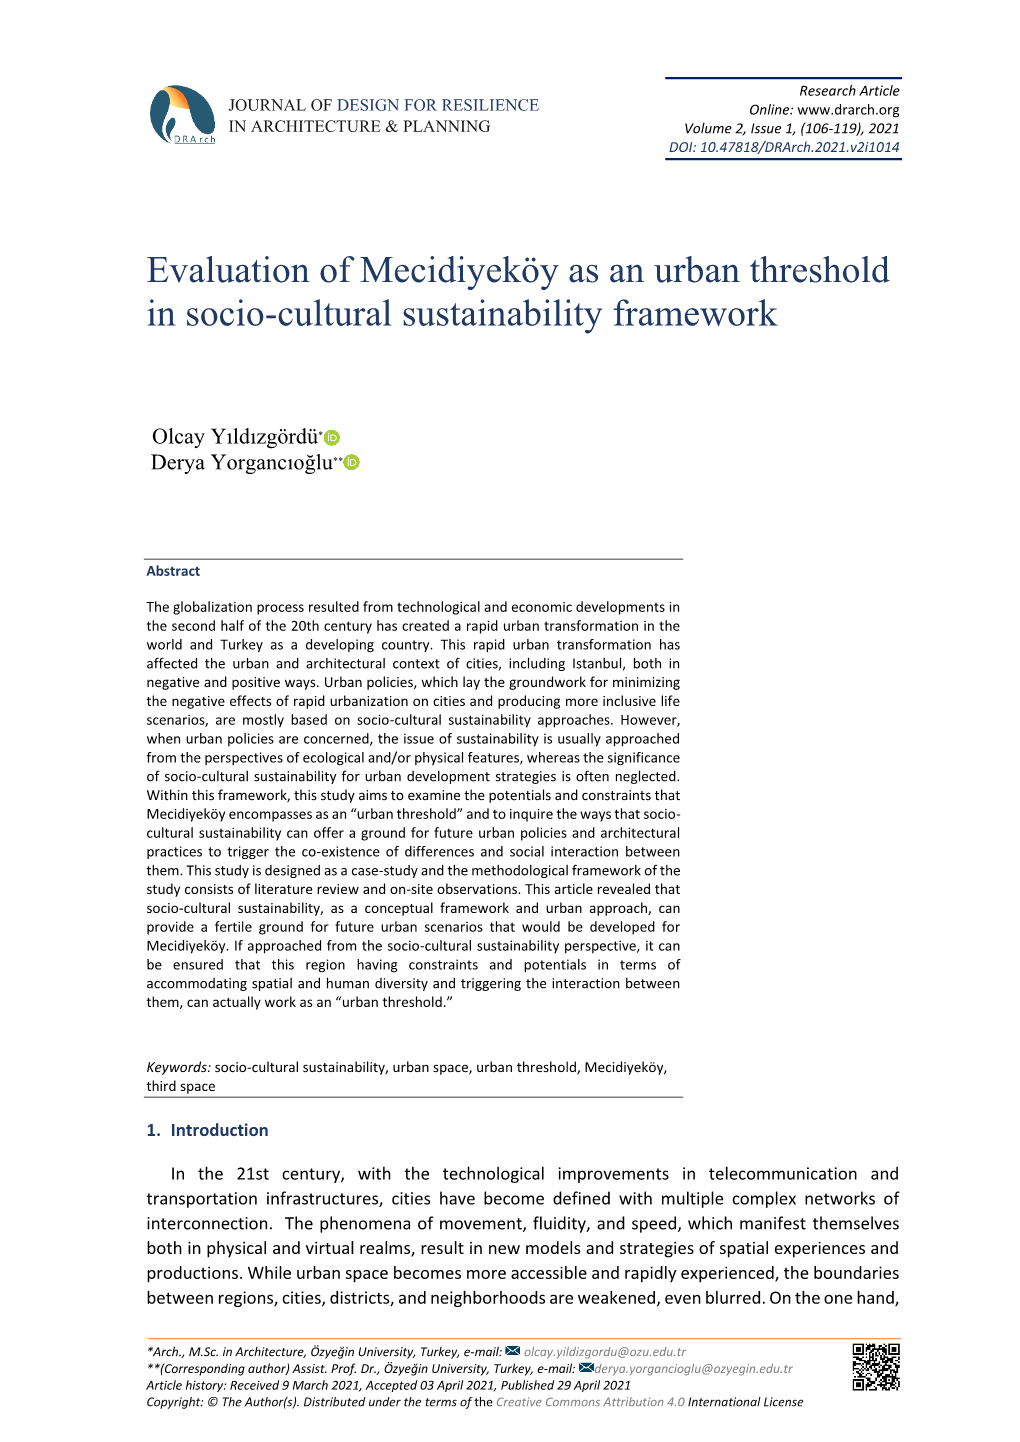 Evaluation of Mecidiyeköy As an Urban Threshold in Socio-Cultural Sustainability Framework